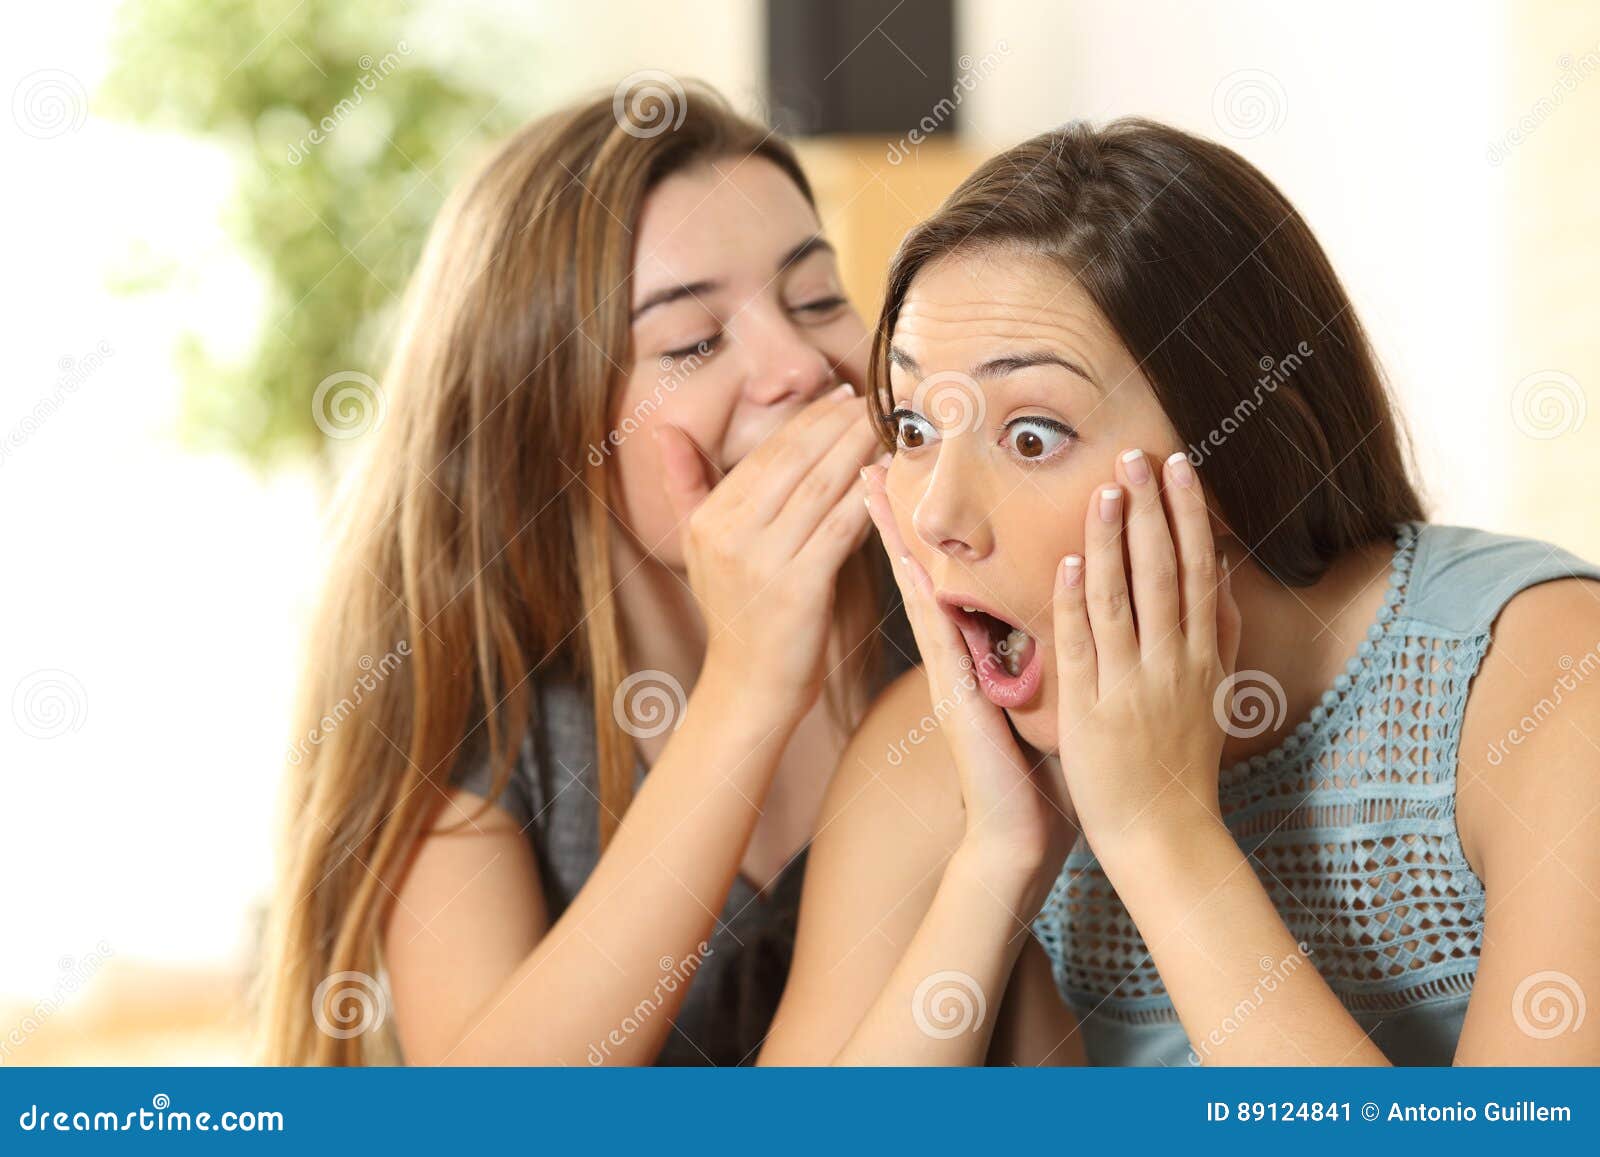 girl telling secrets to her amazed friend